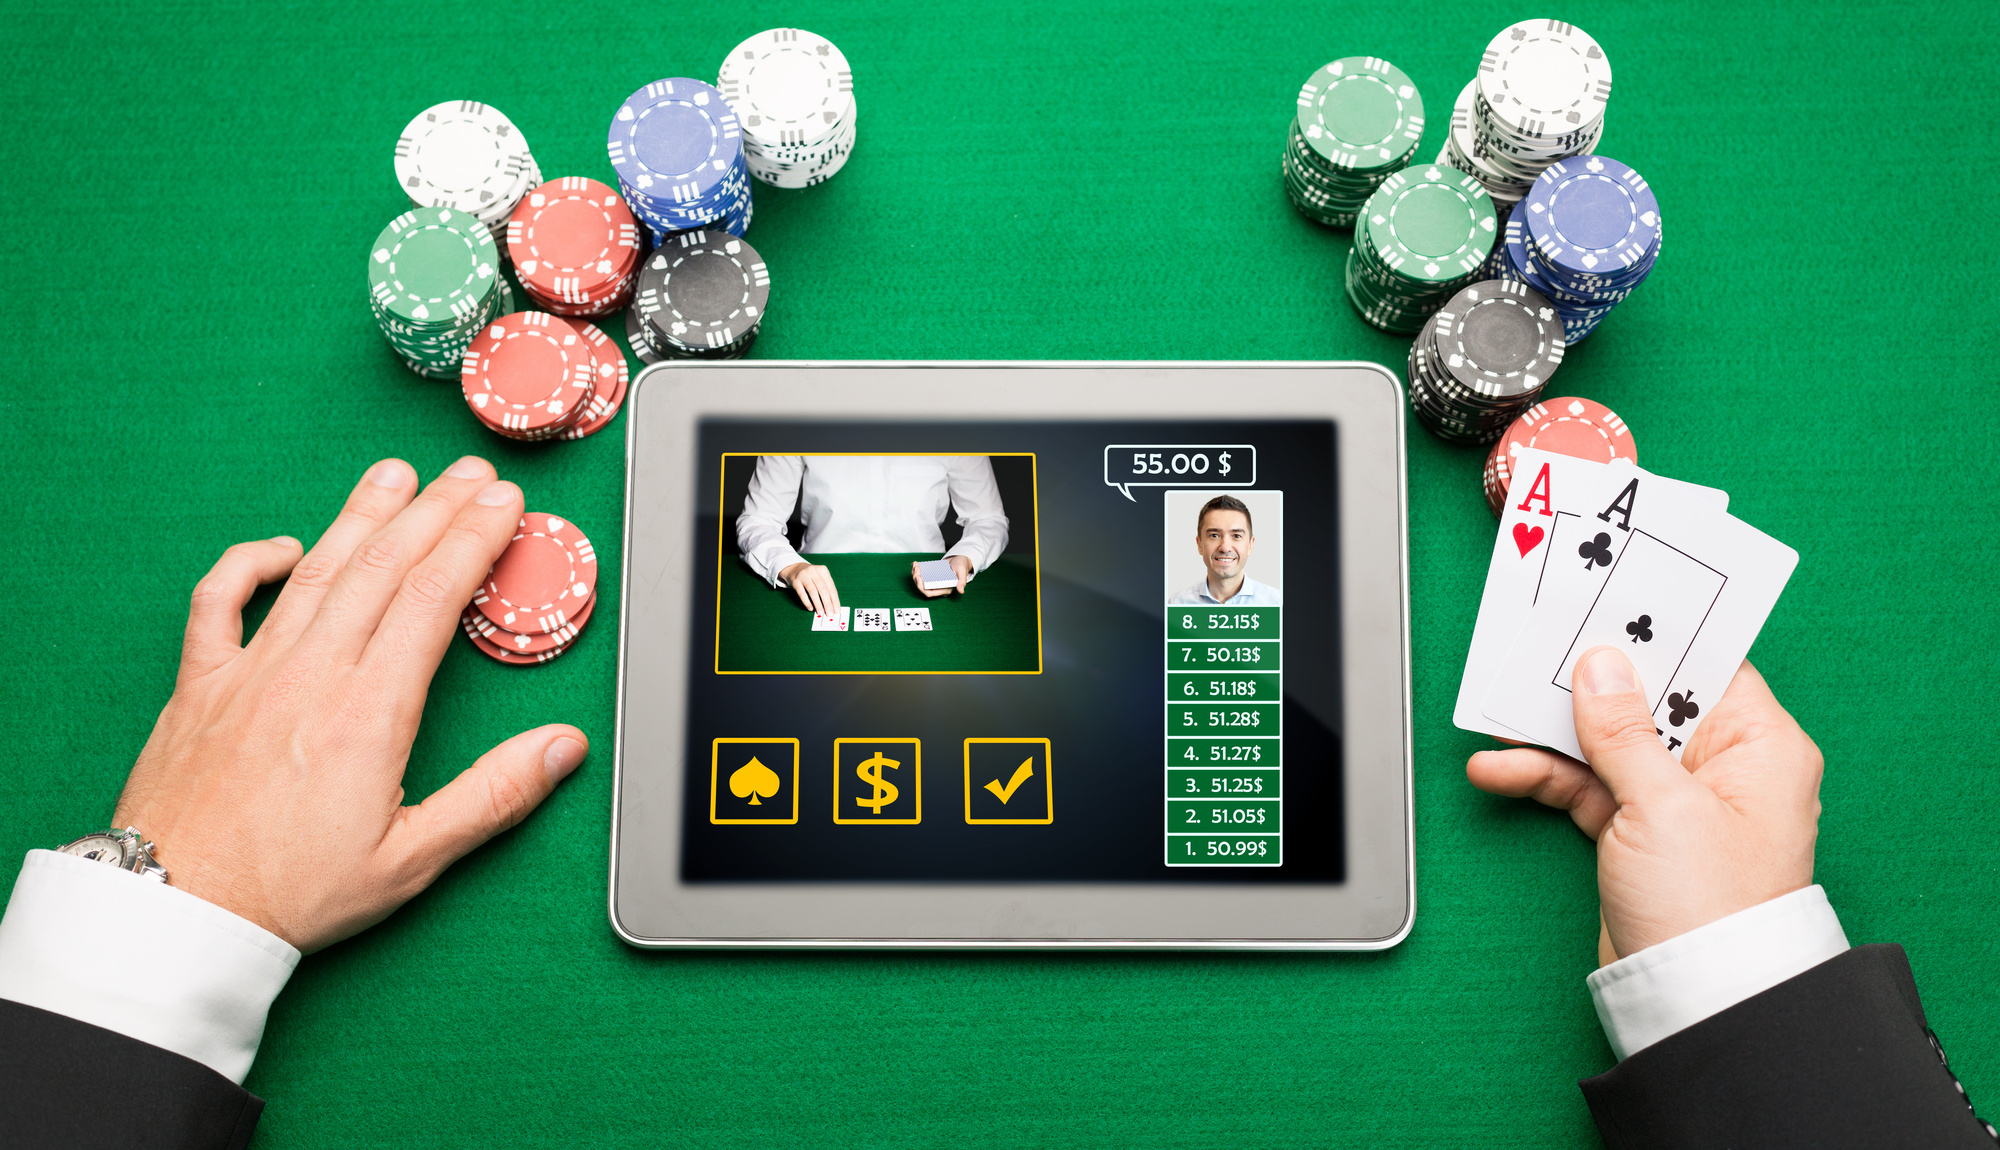 Does gambling make you rich?